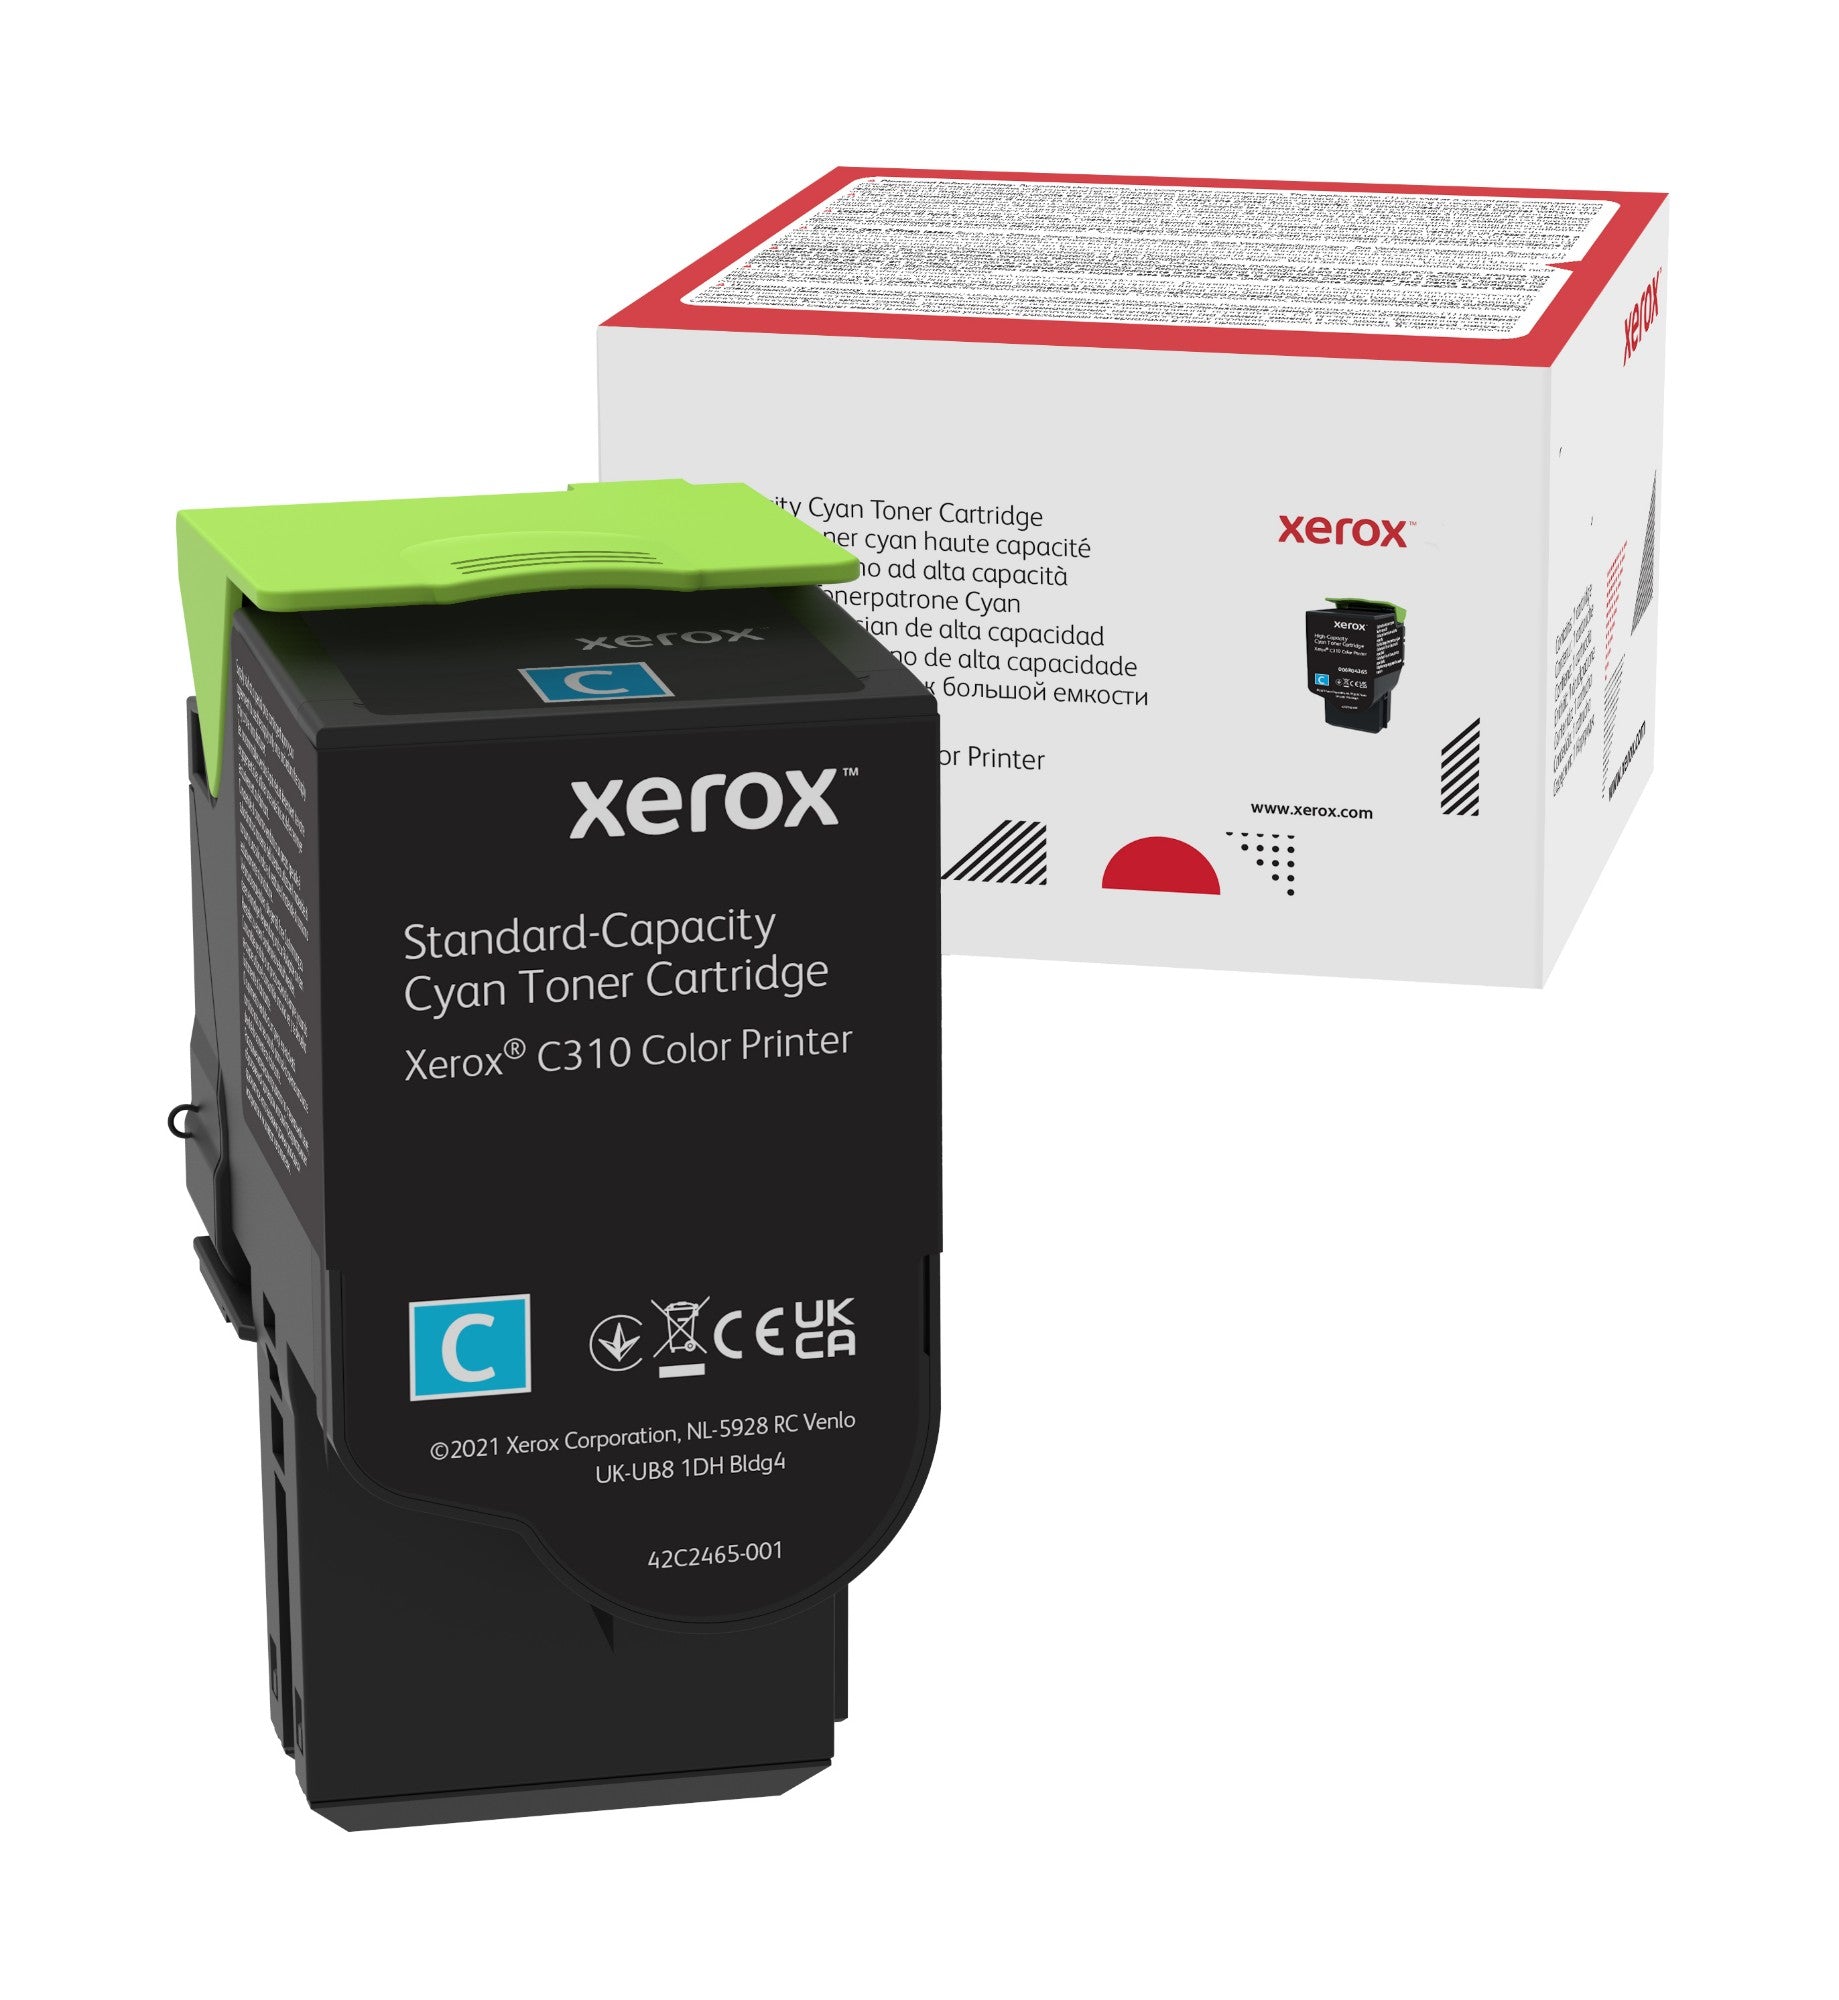 Xerox 006R04357 Toner-kit cyan, 2K pages ISO/IEC 19752 for Xerox C 310